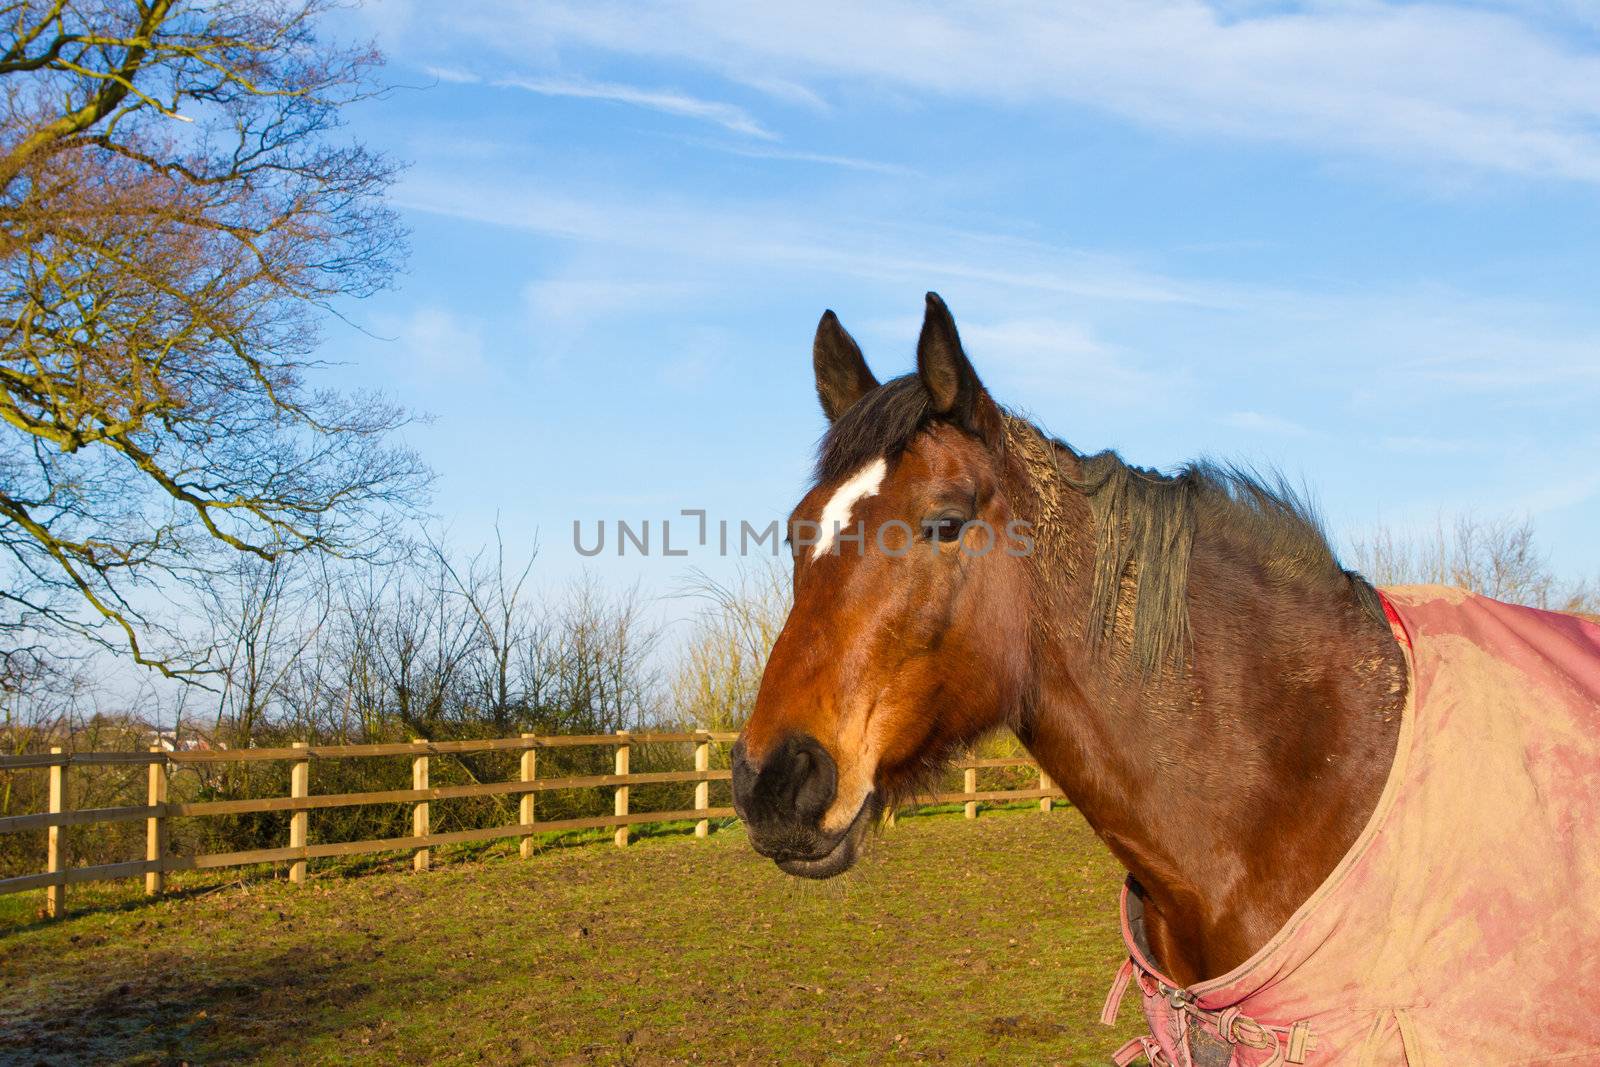 Horse in field wearing horse rug